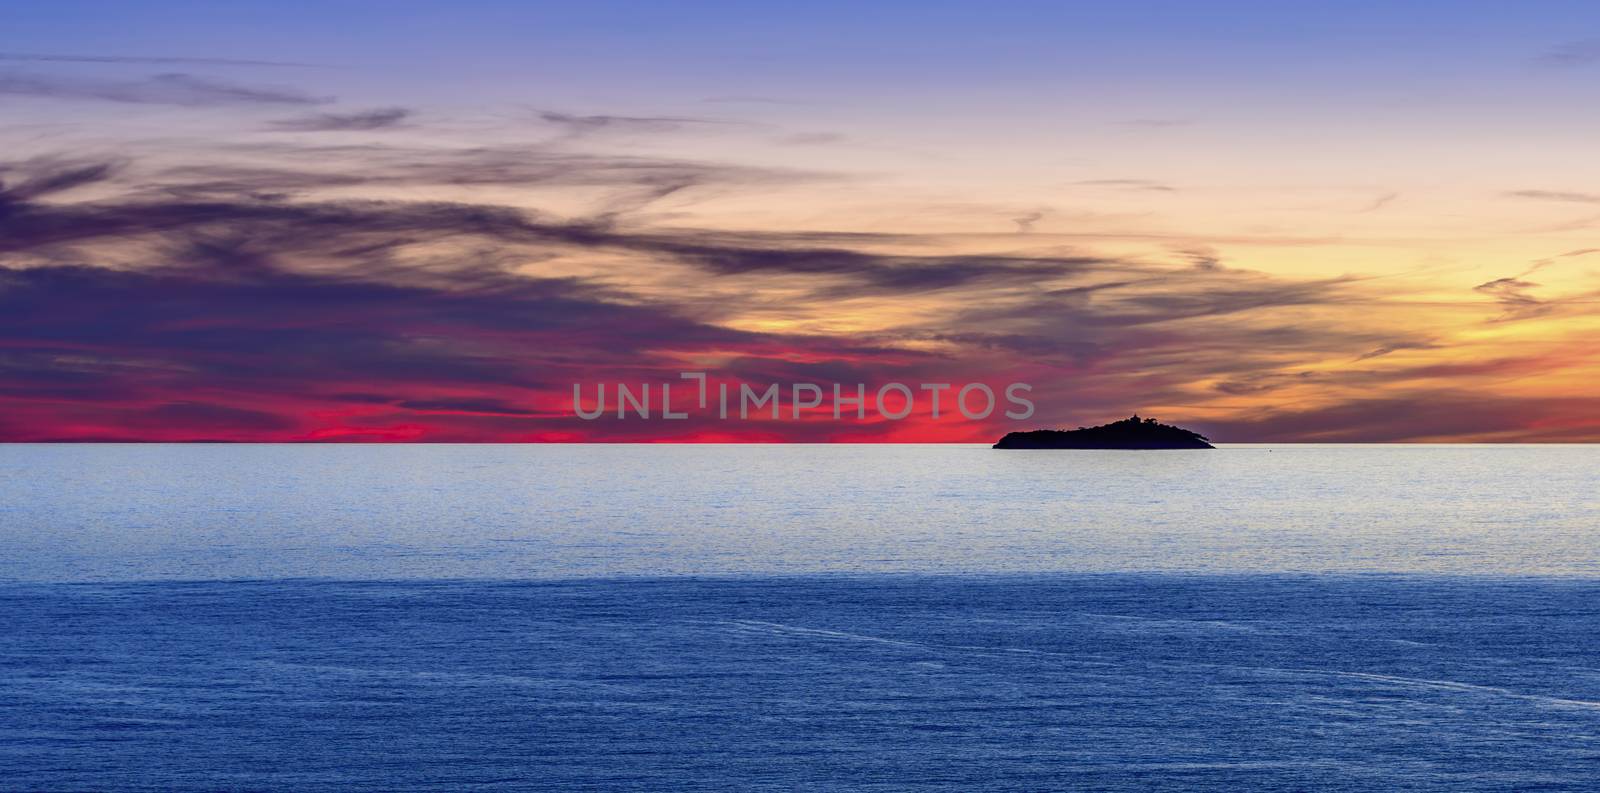 Sunset over Sveti Andrija island near Dubrovnik, Croatia by asafaric